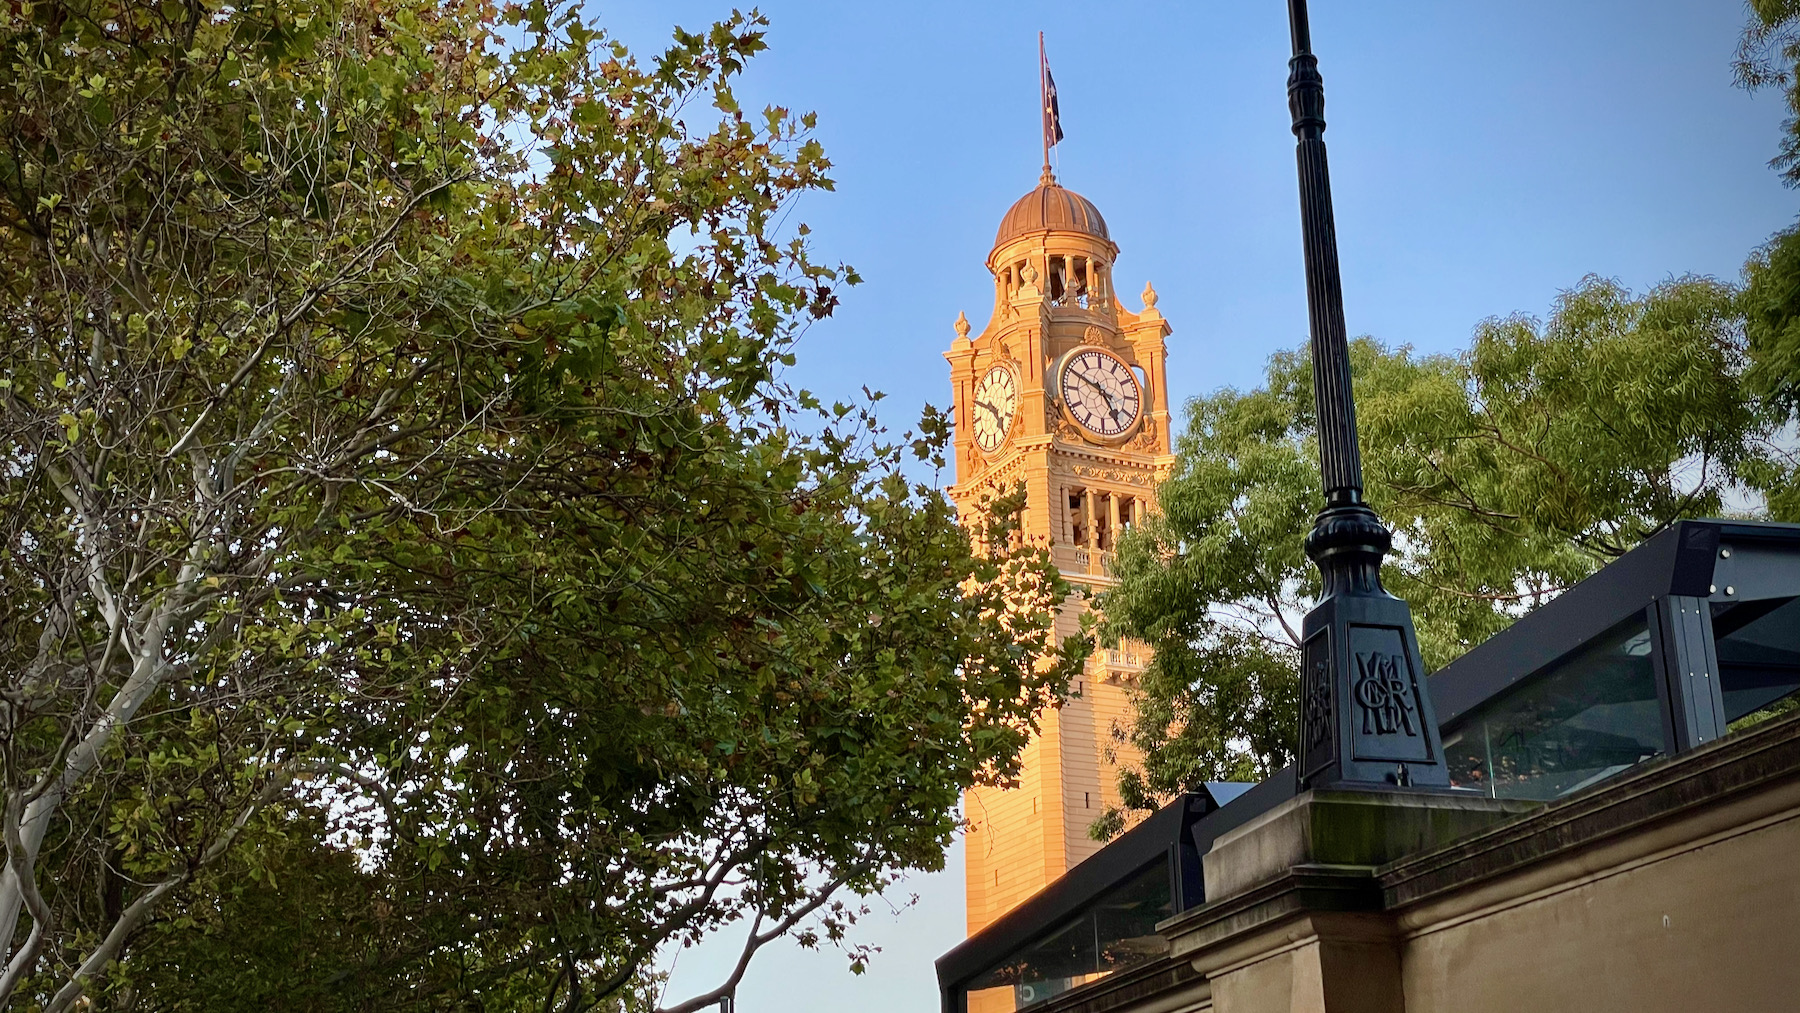 Sydney Central station clock tower